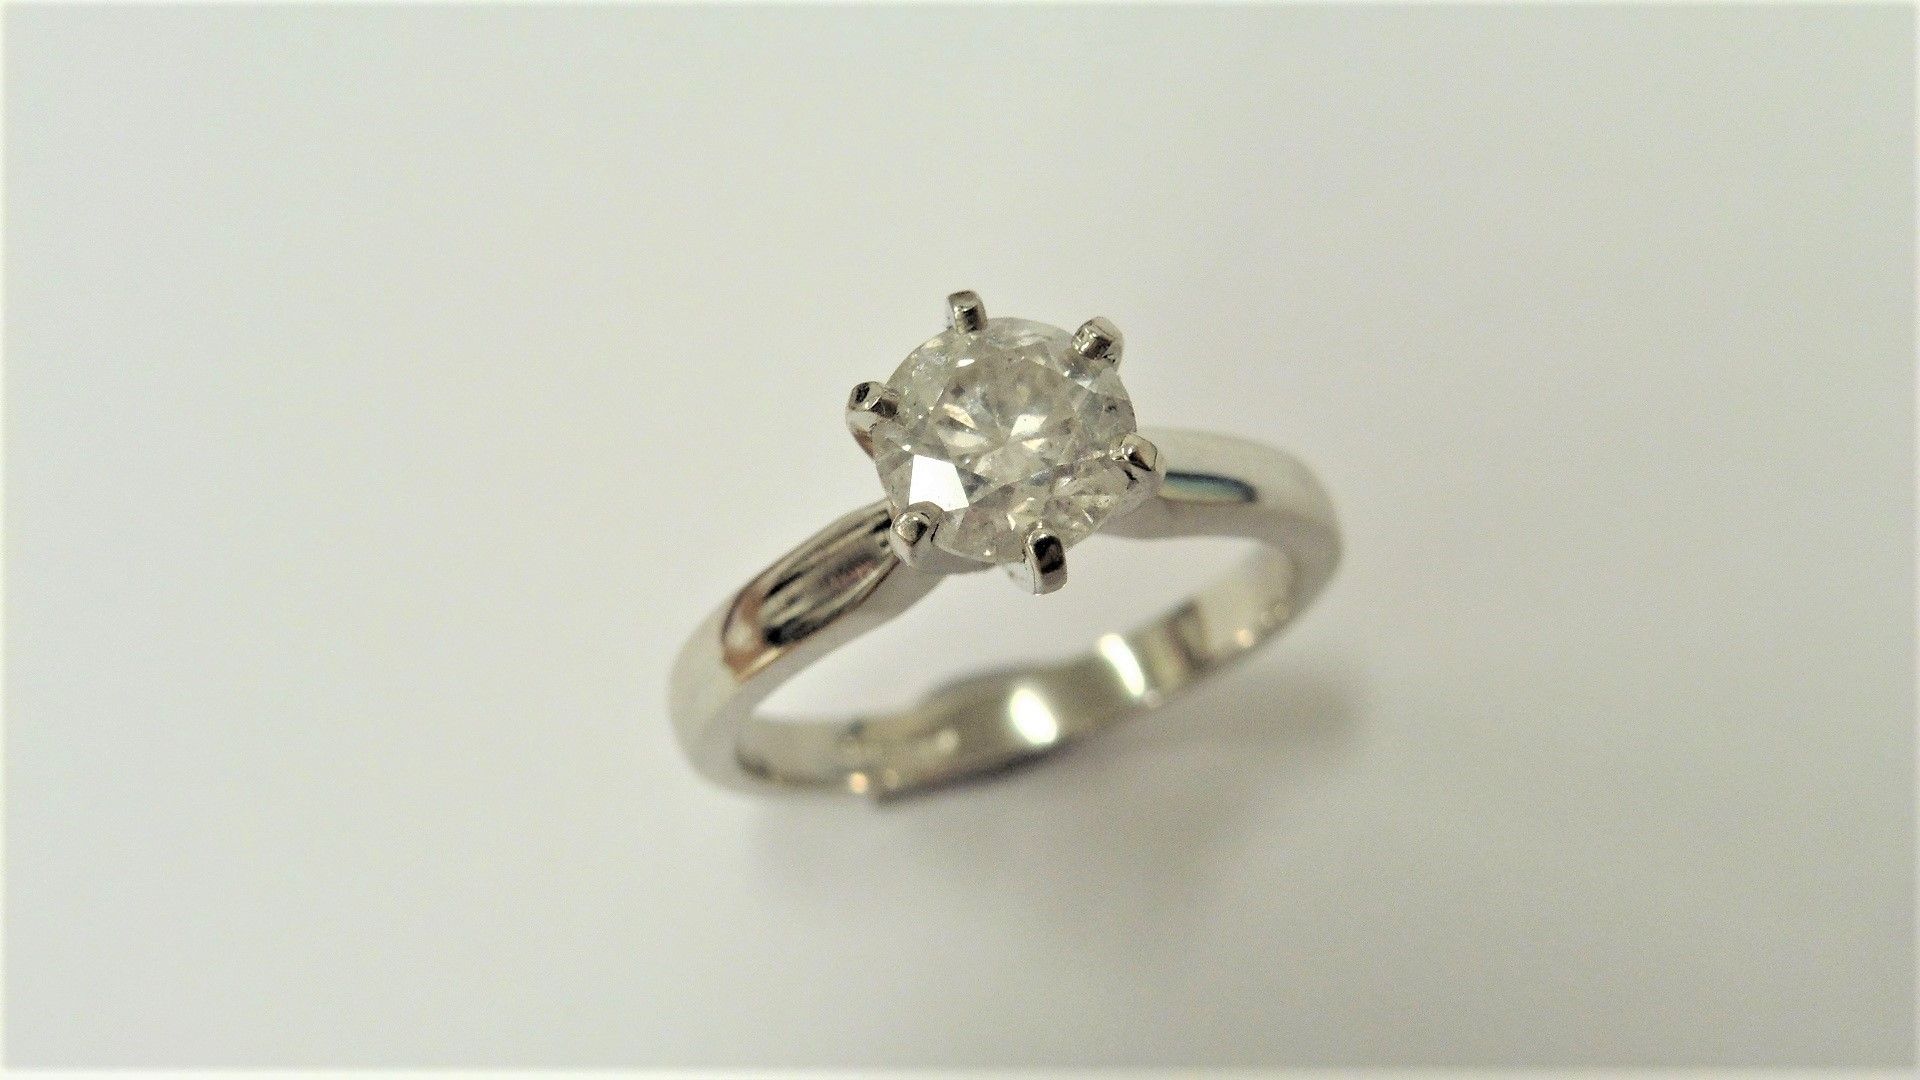 1.02ct diamond solitaire ring set in platinum. Brilliant cut diamond, H colour and I1-2 clarity. 6